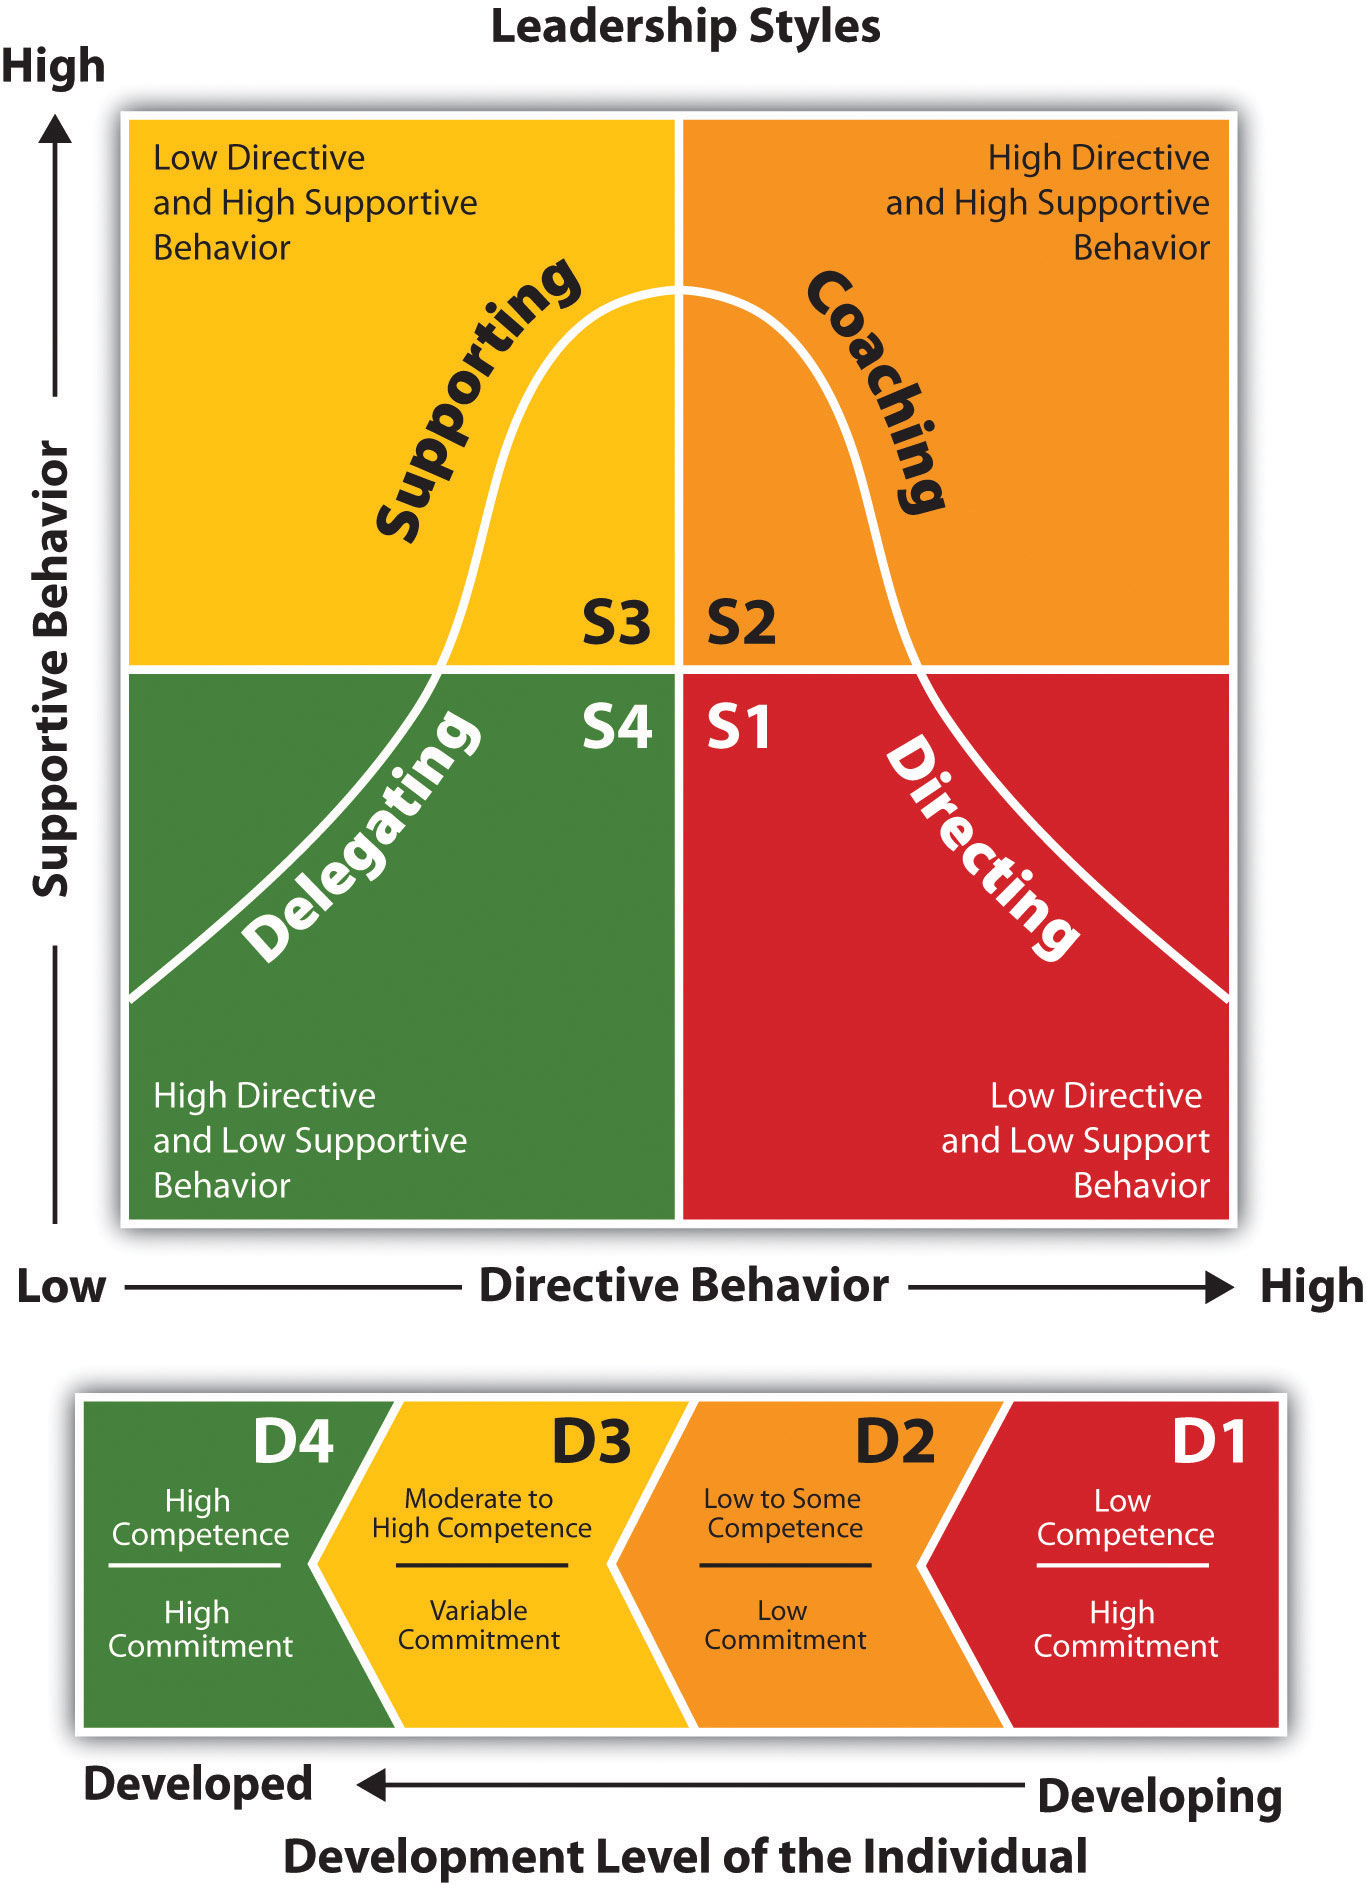 Blanchard's Situational Leadership Model